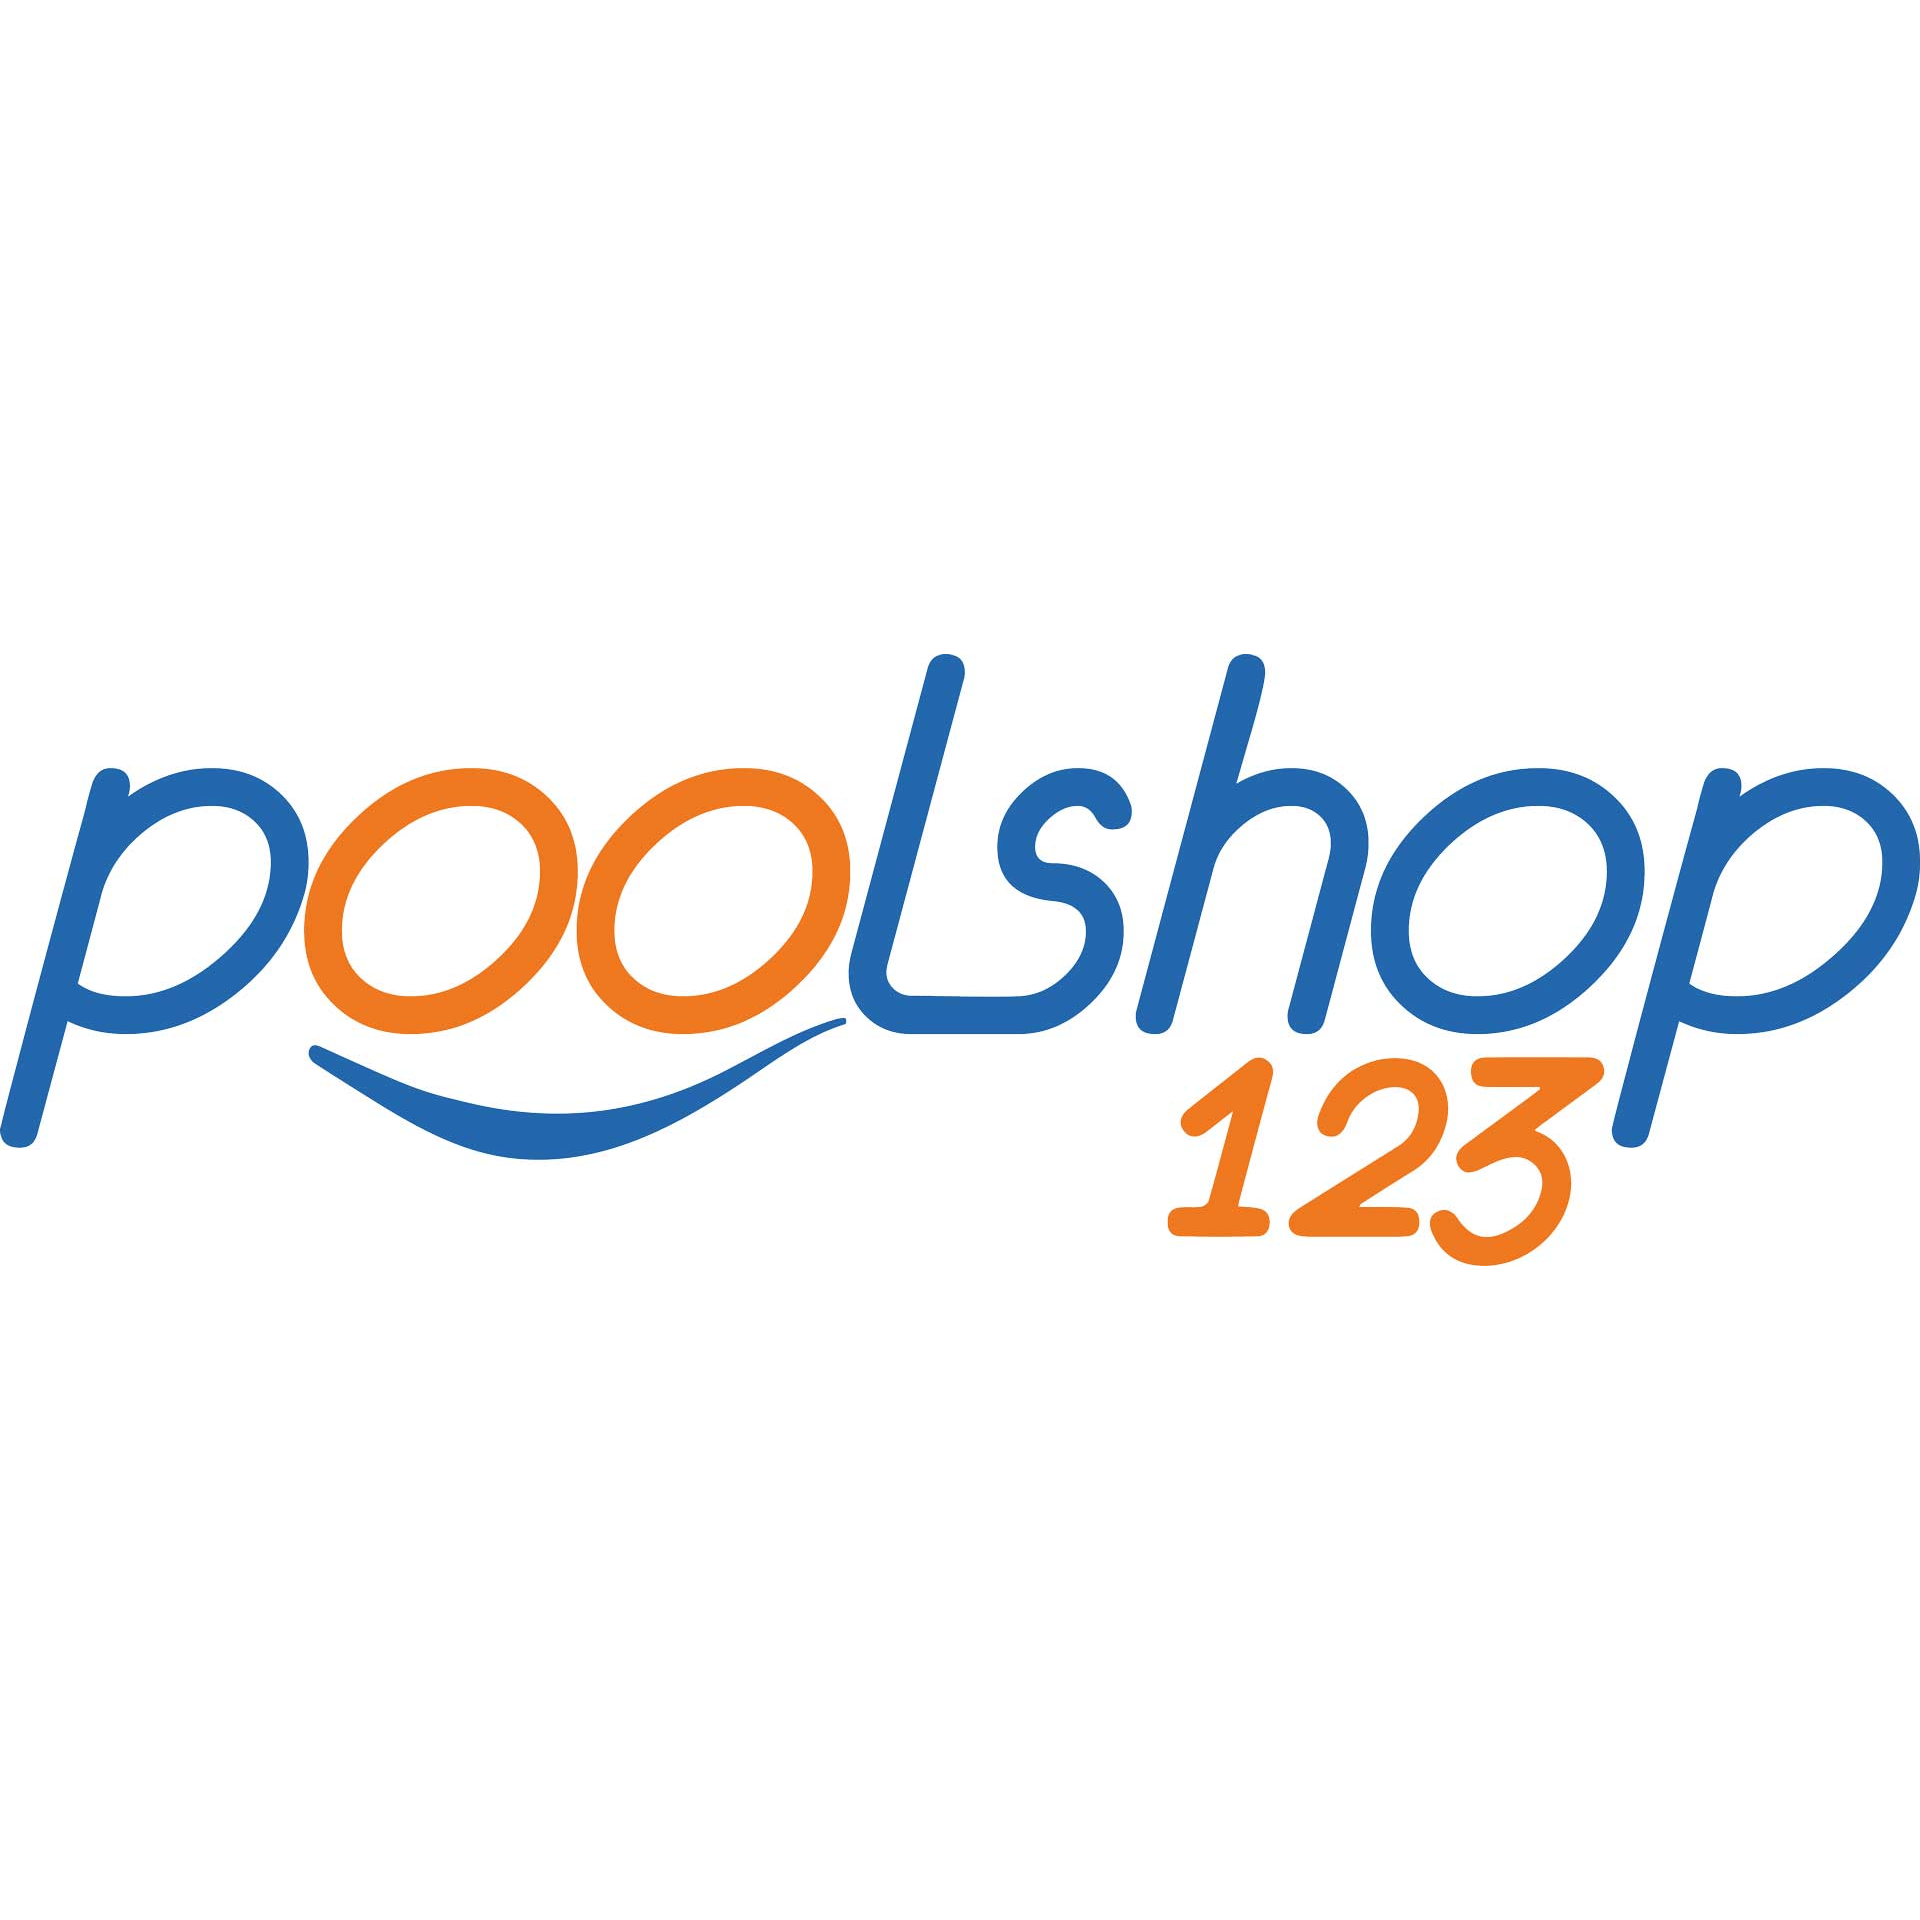 Poolshop123 GmbH